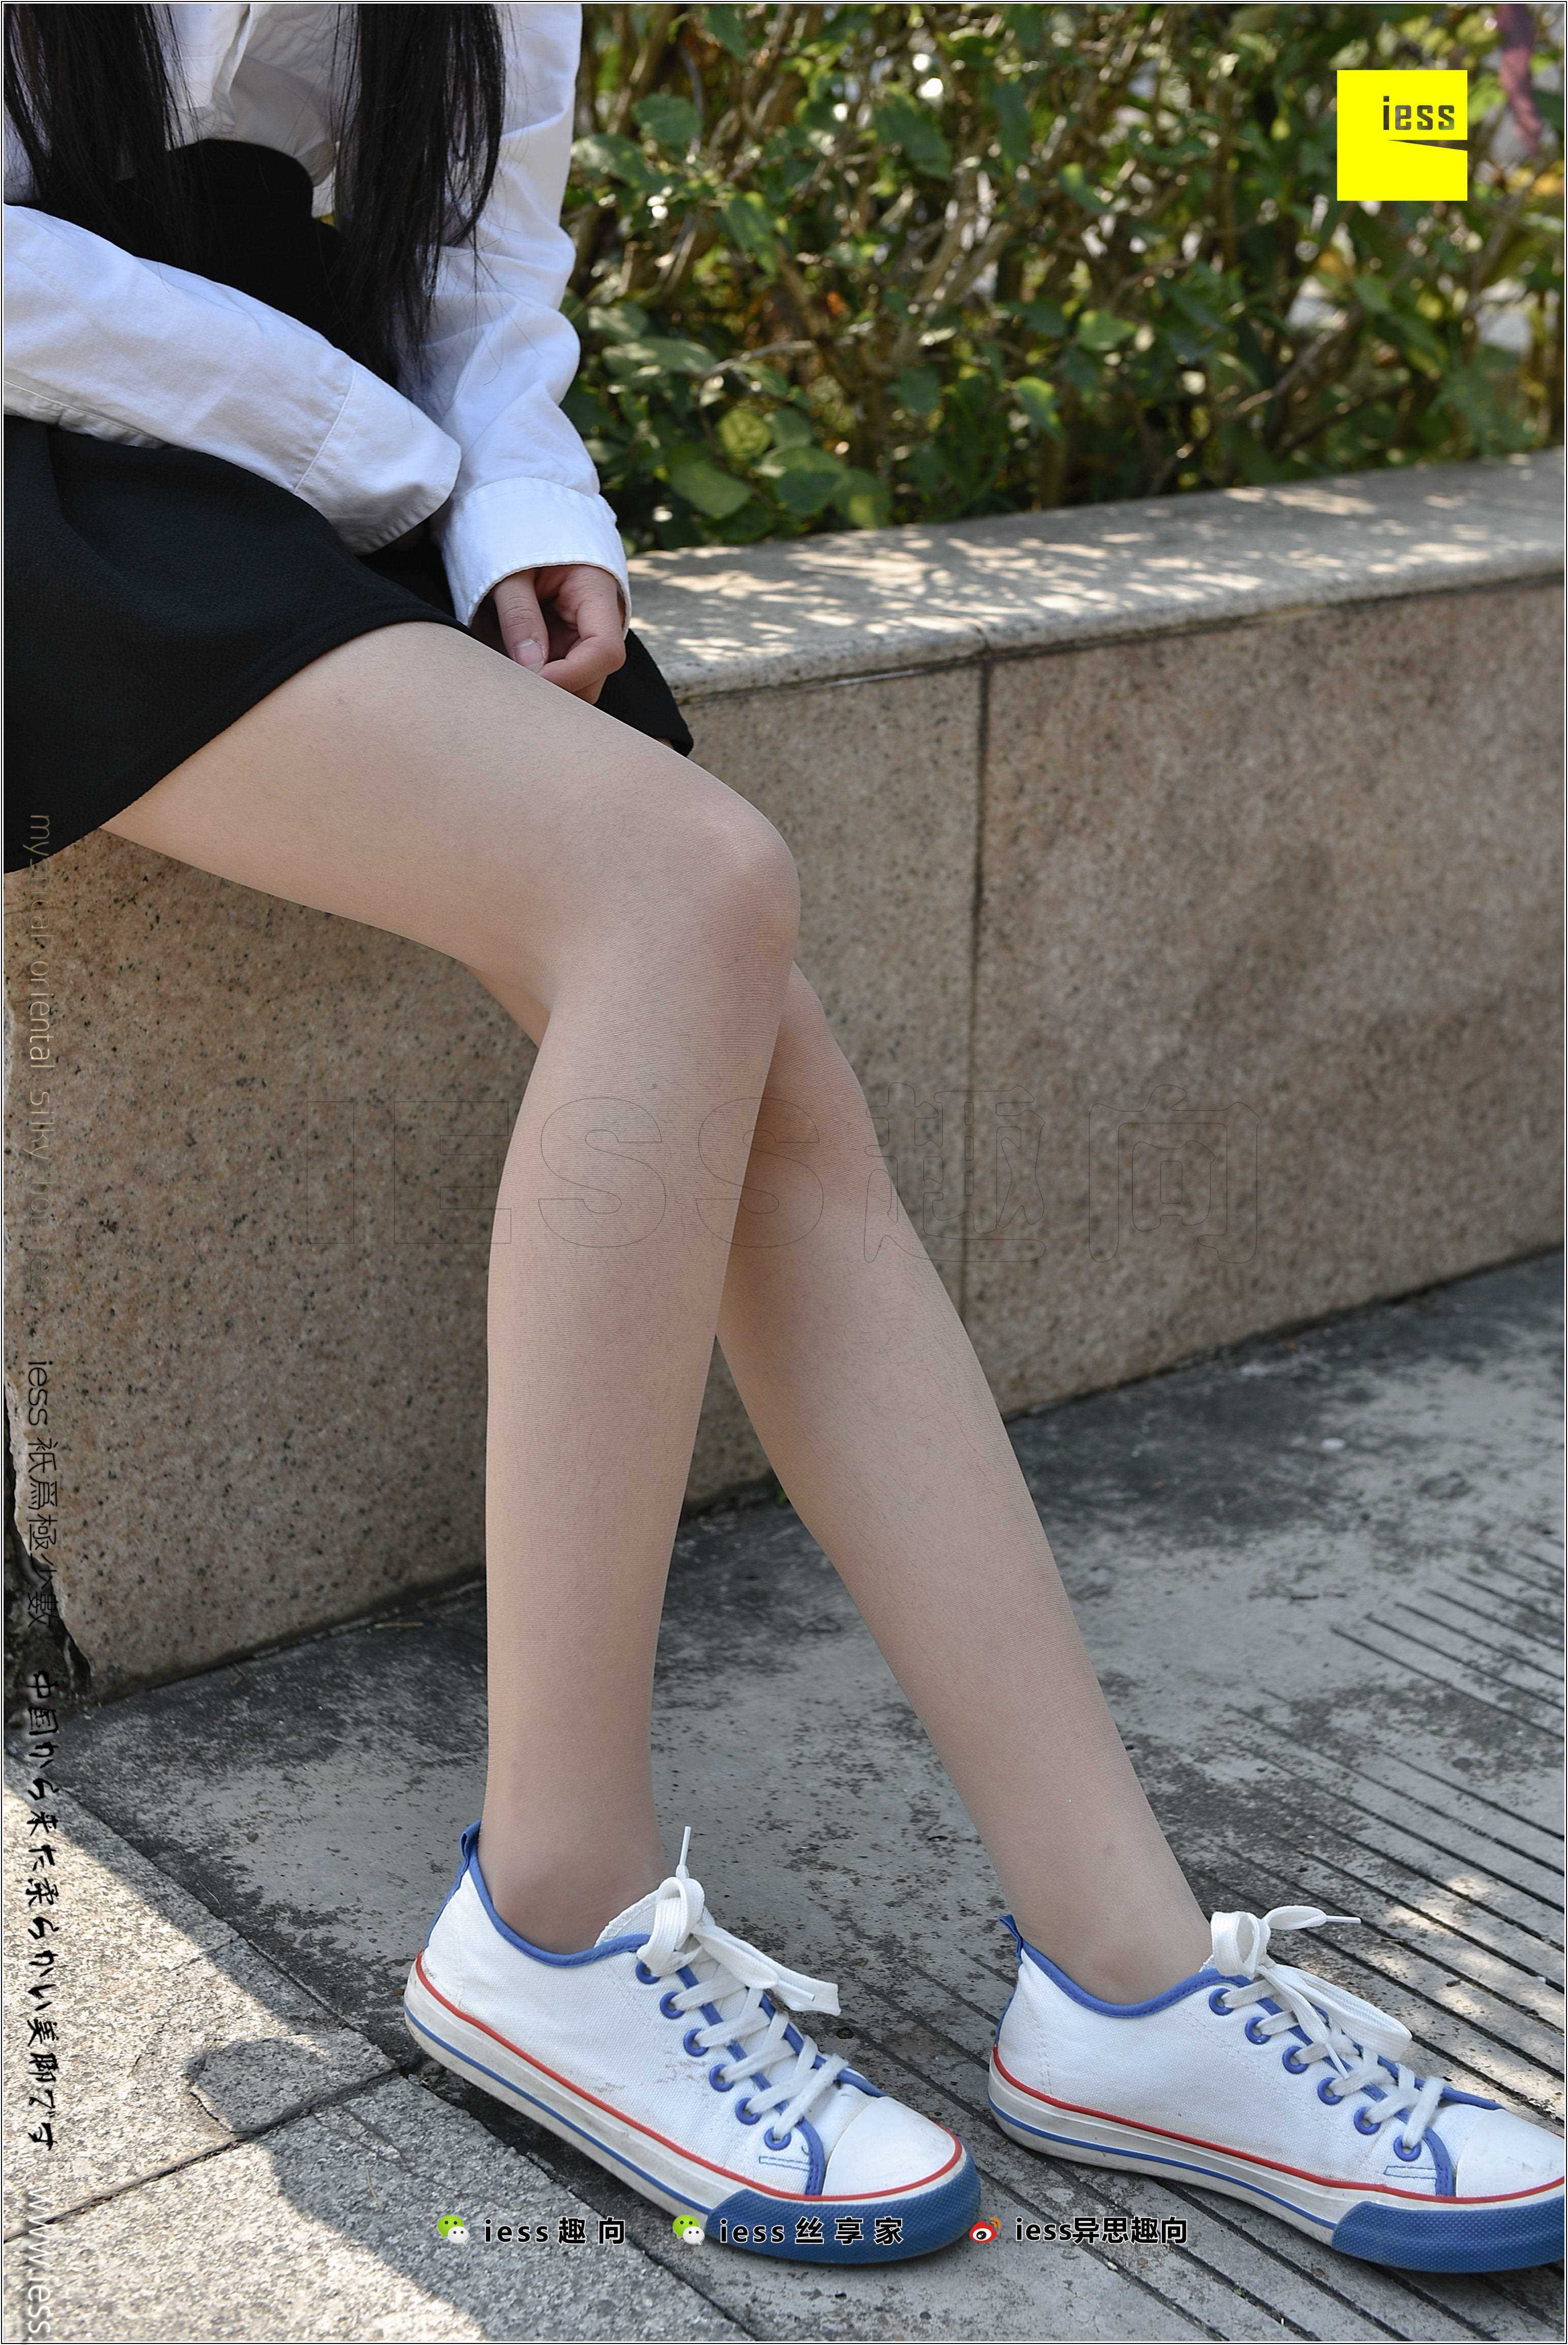 China Beauty Legs and feet 281